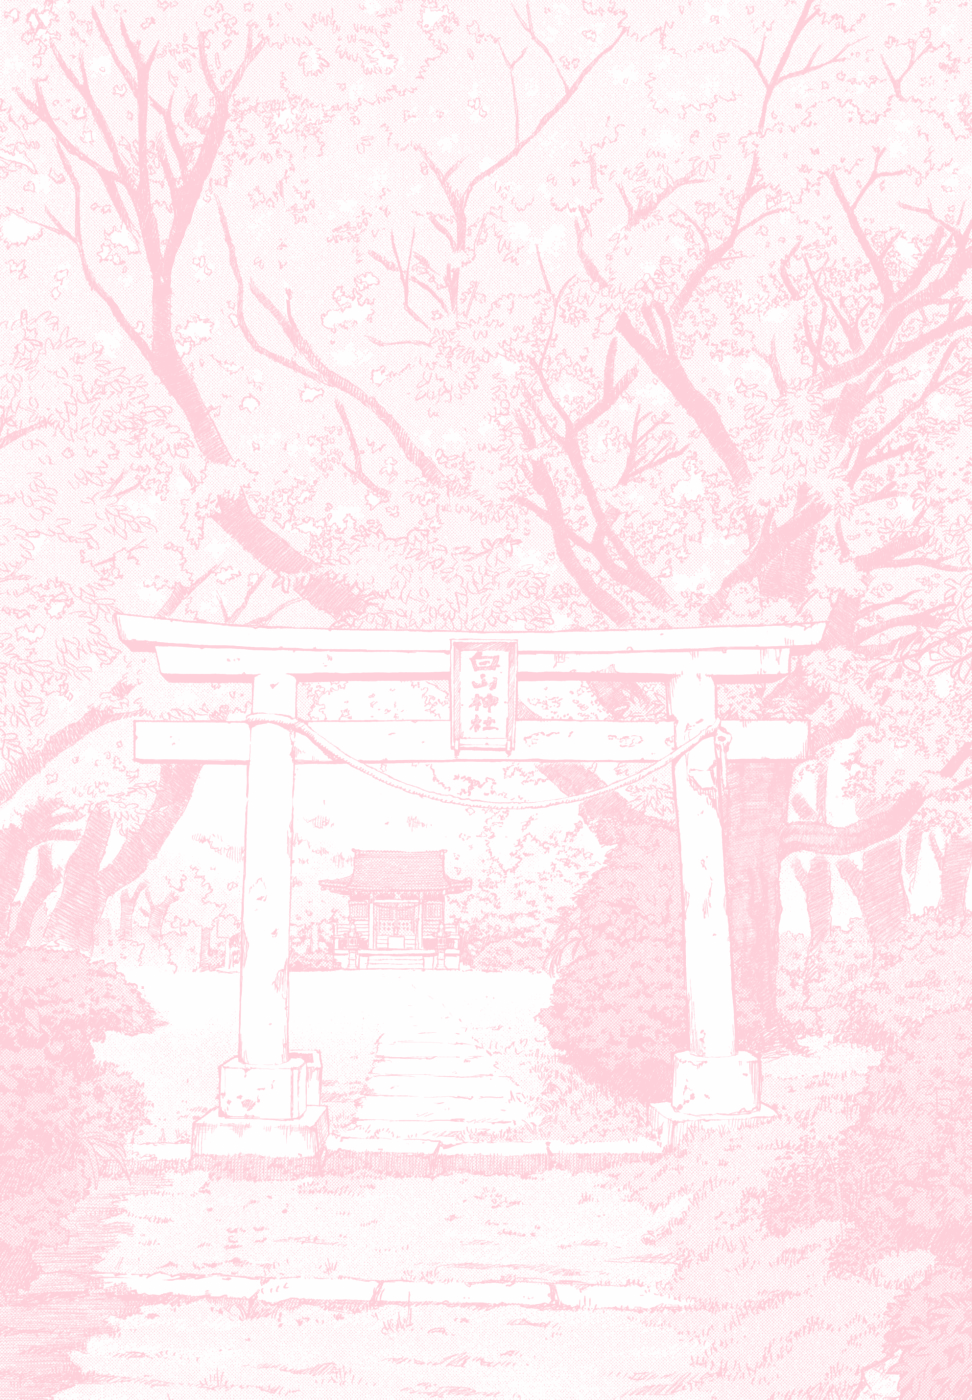 Pastel Pink Anime Aesthetic Wallpaper. Aesthetic pastel